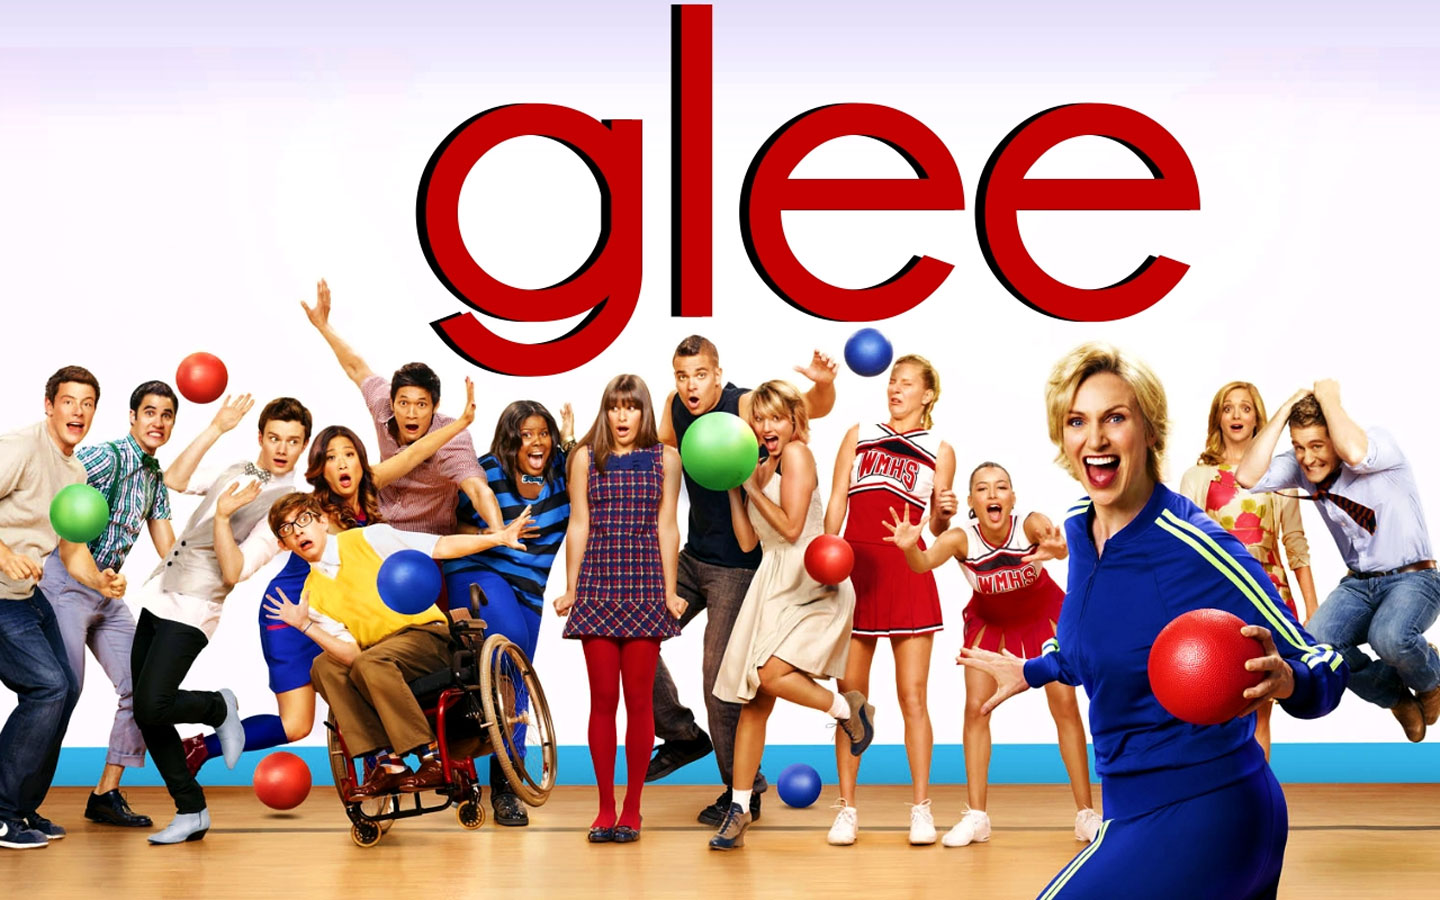 50 Glee Wallpaper Season 3 On Wallpapersafari